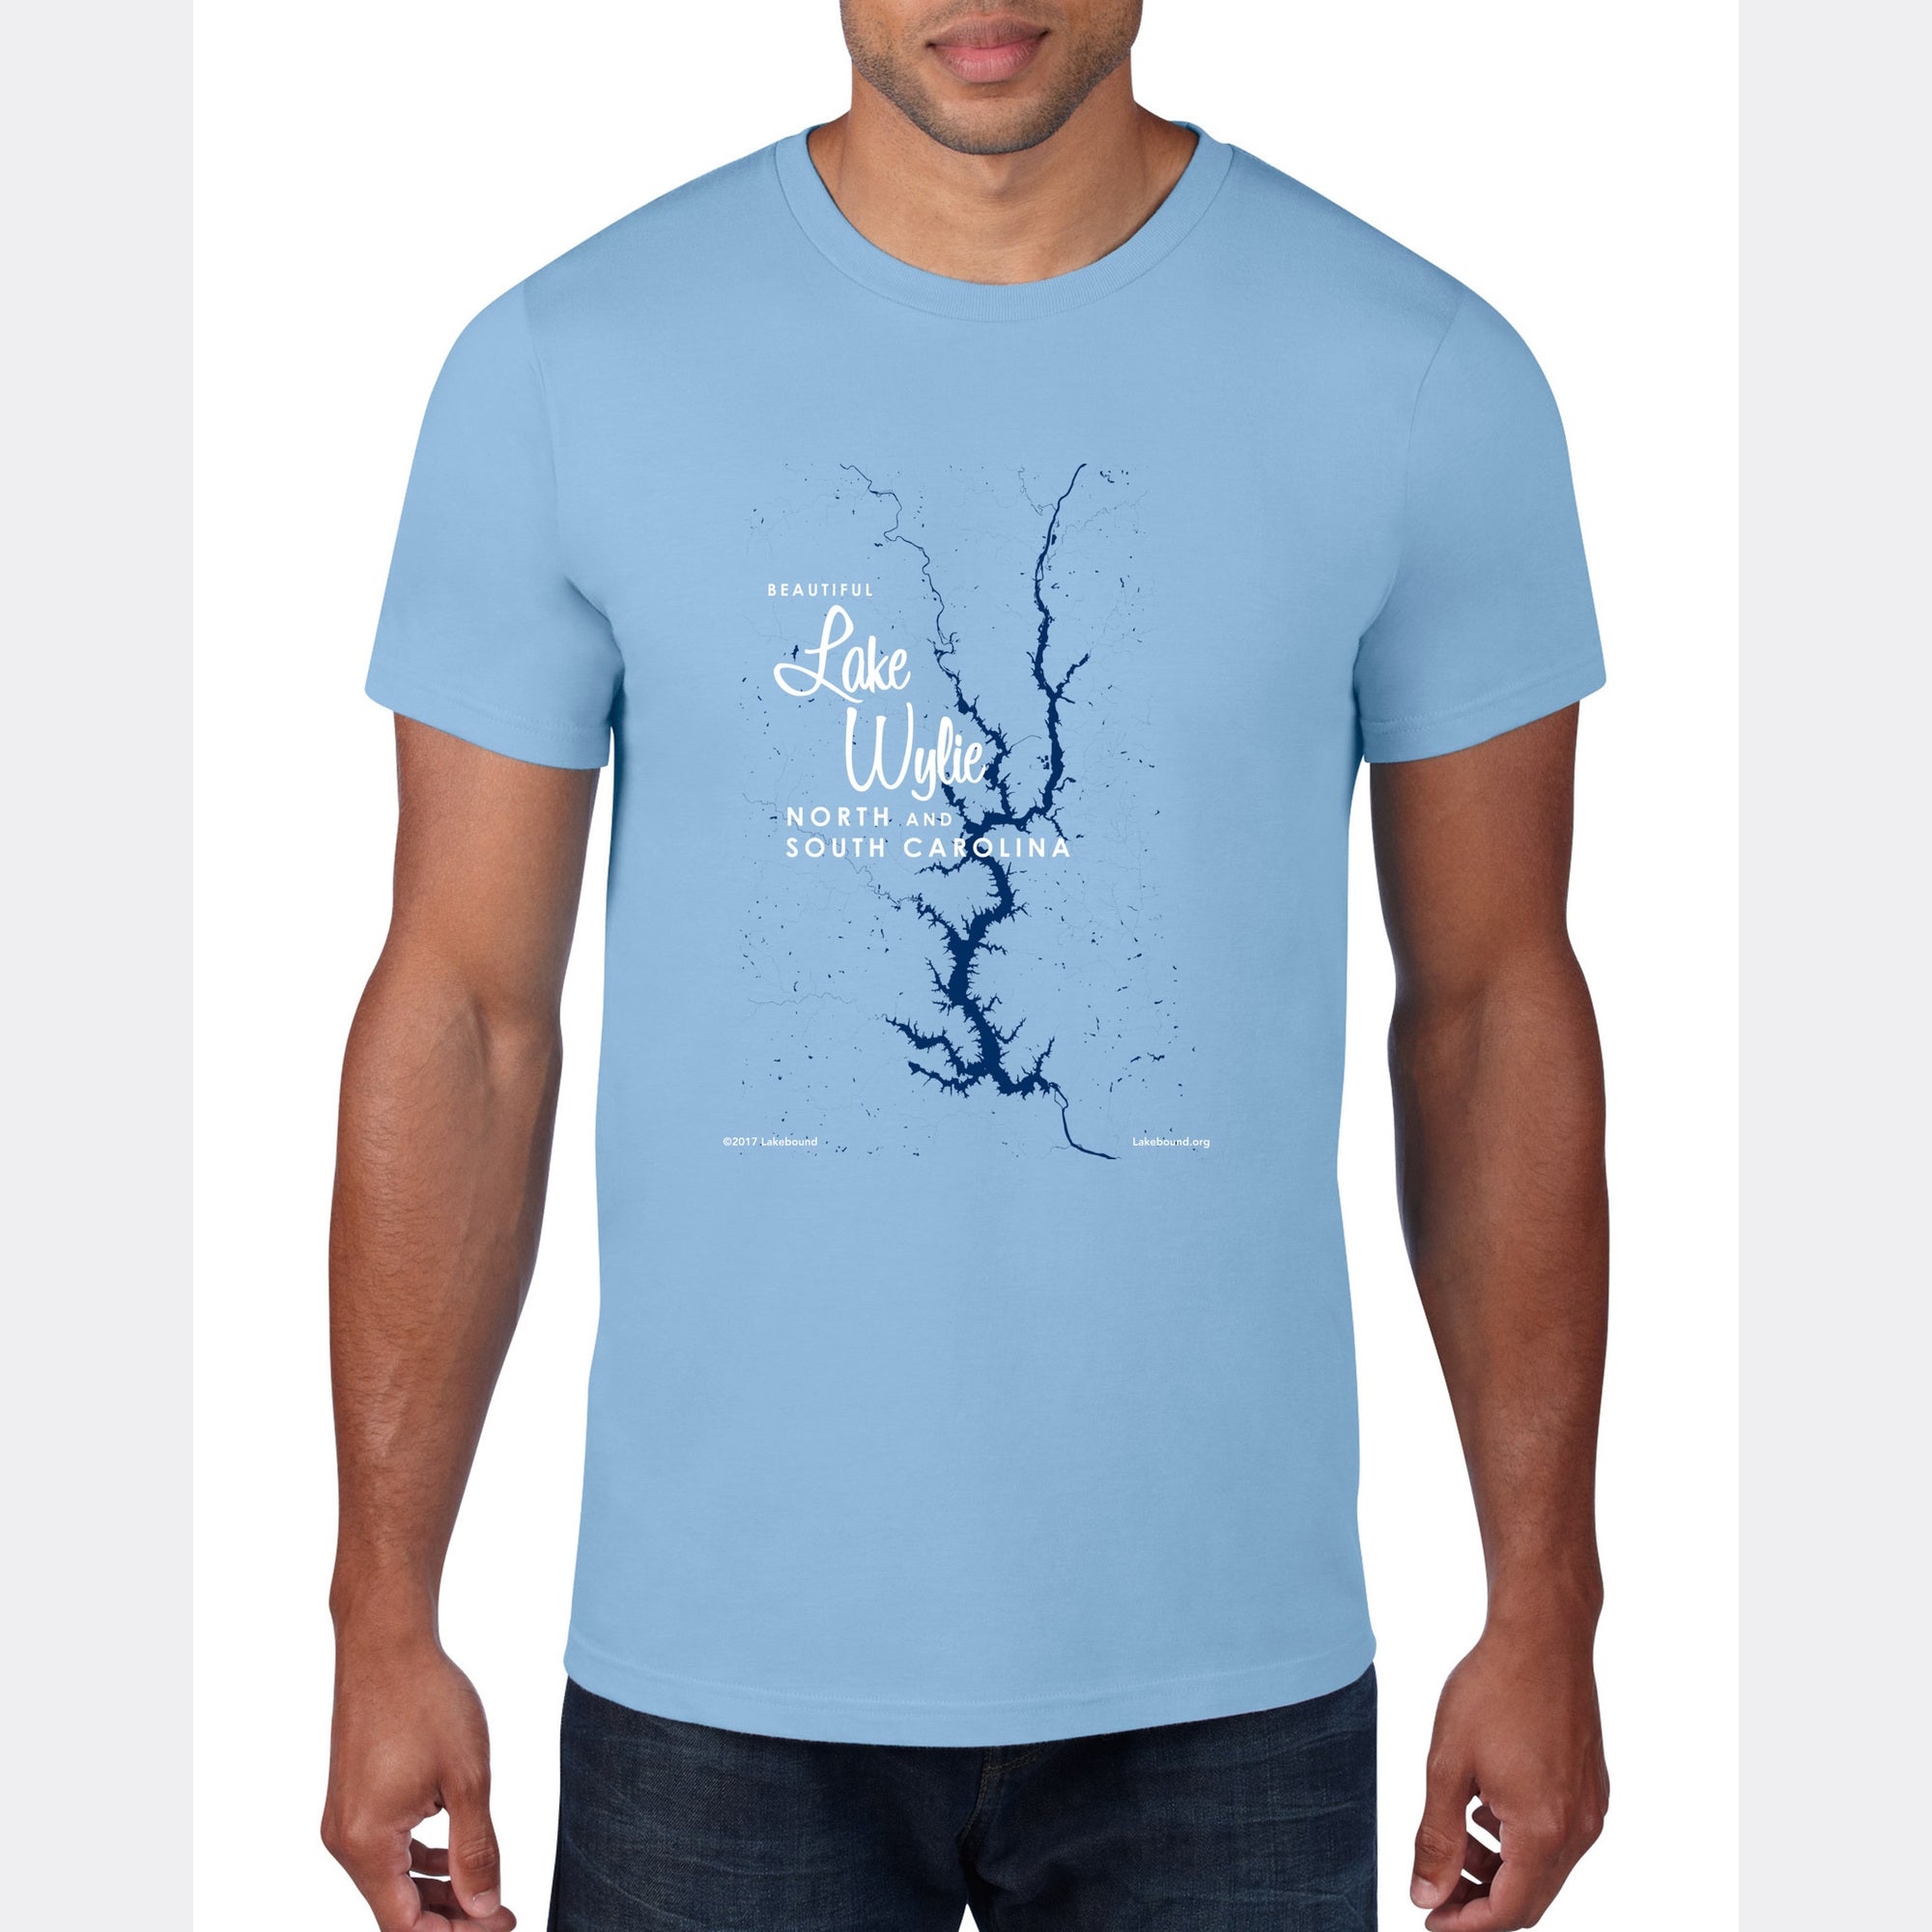 Lake Wylie North and South Carolina, T-Shirt